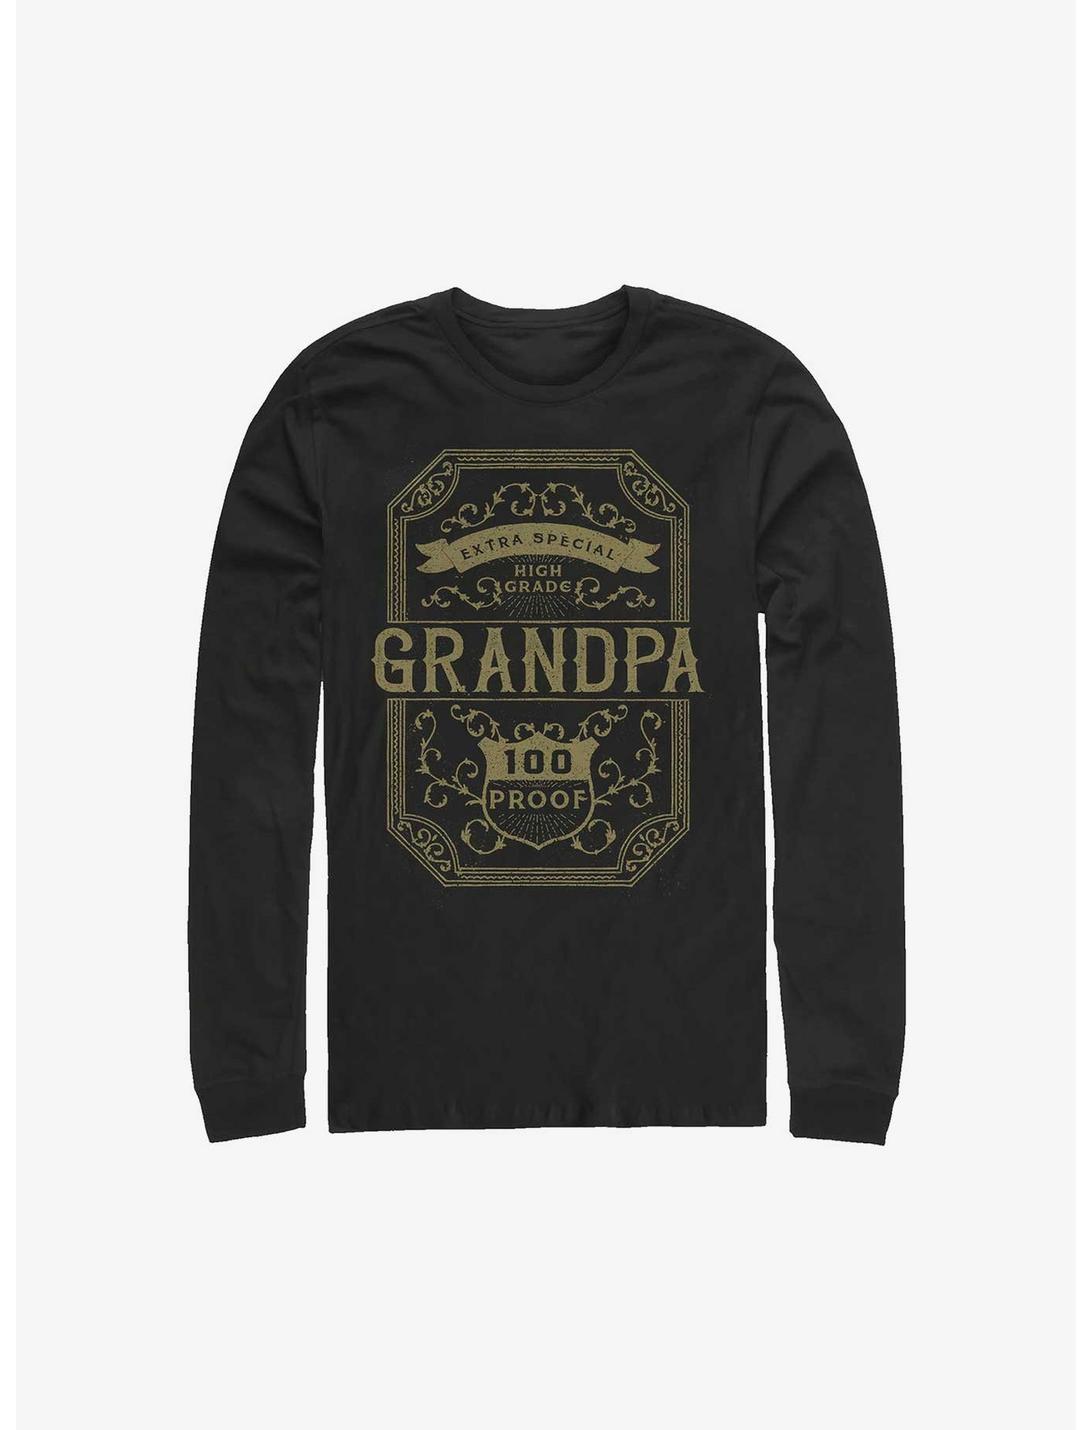 High Grade Grandpa Long-Sleeve T-Shirt, BLACK, hi-res